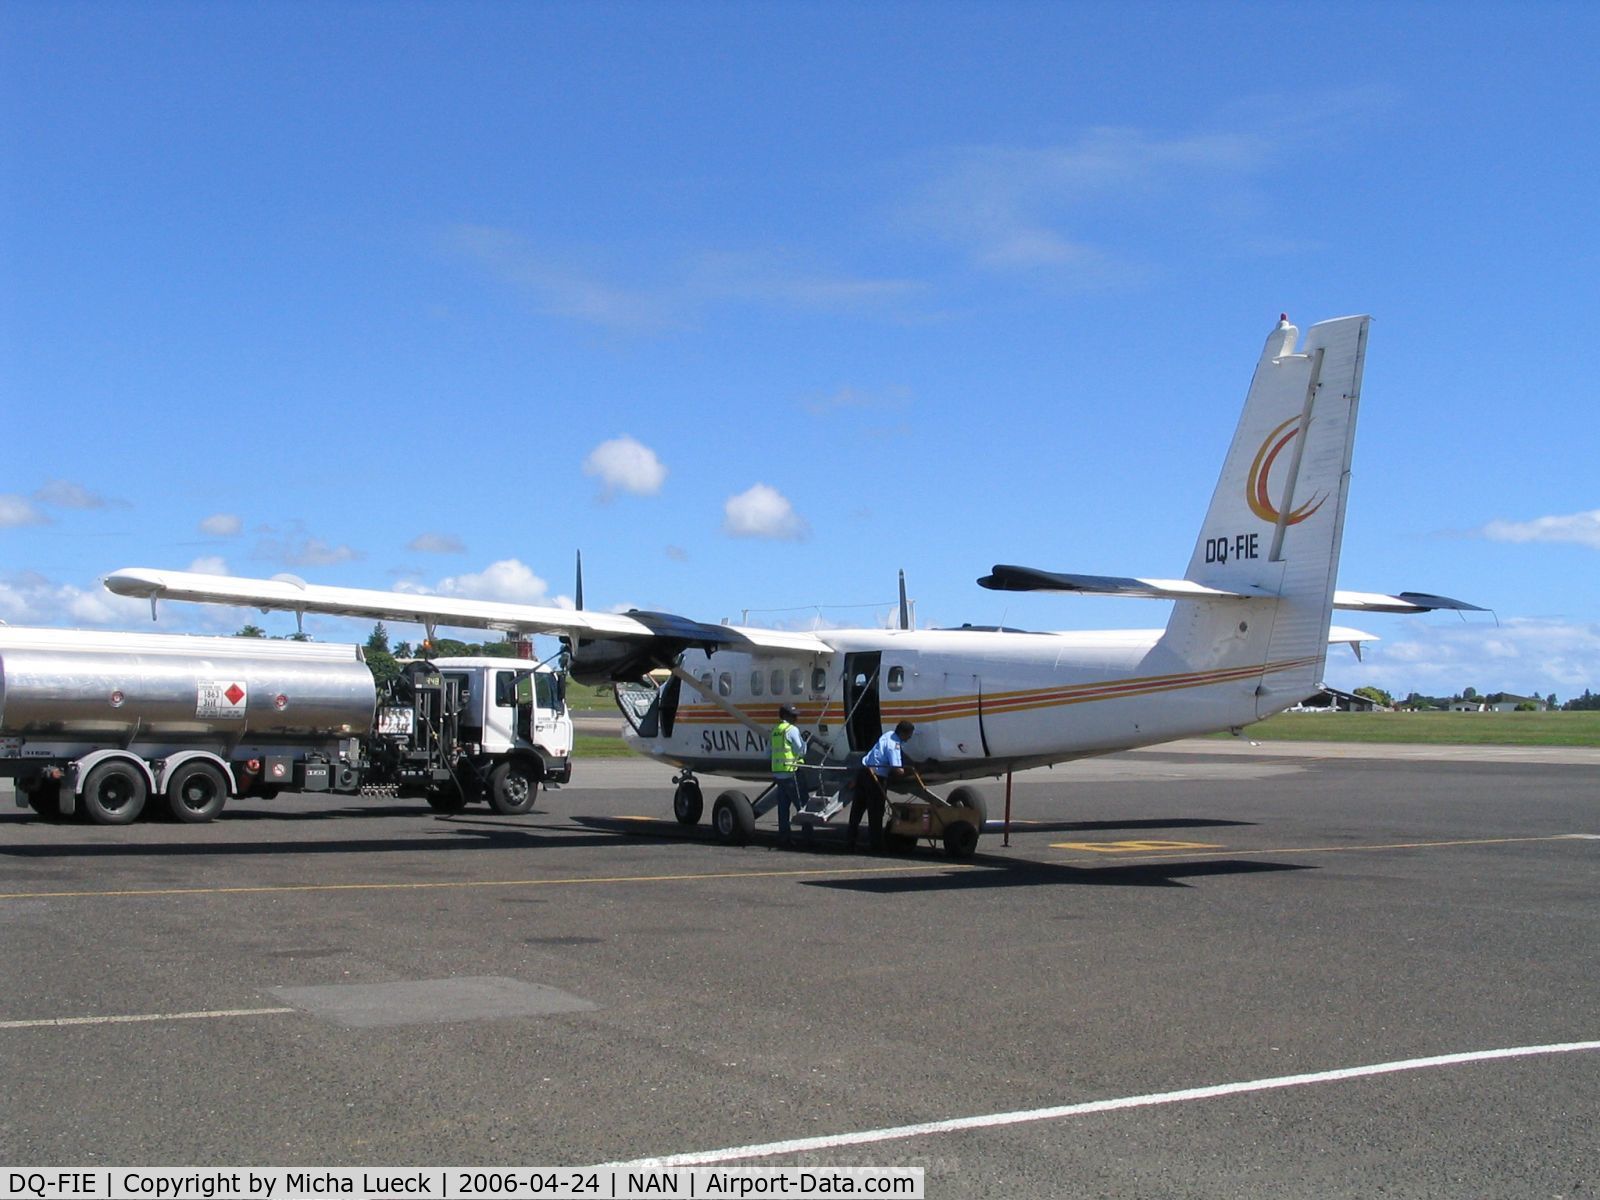 DQ-FIE, 1992 De Havilland Canada DHC-6-300 Twin Otter C/N 660, Seconds before boarding for the flight from Nadi to Taveuni via Savusavu